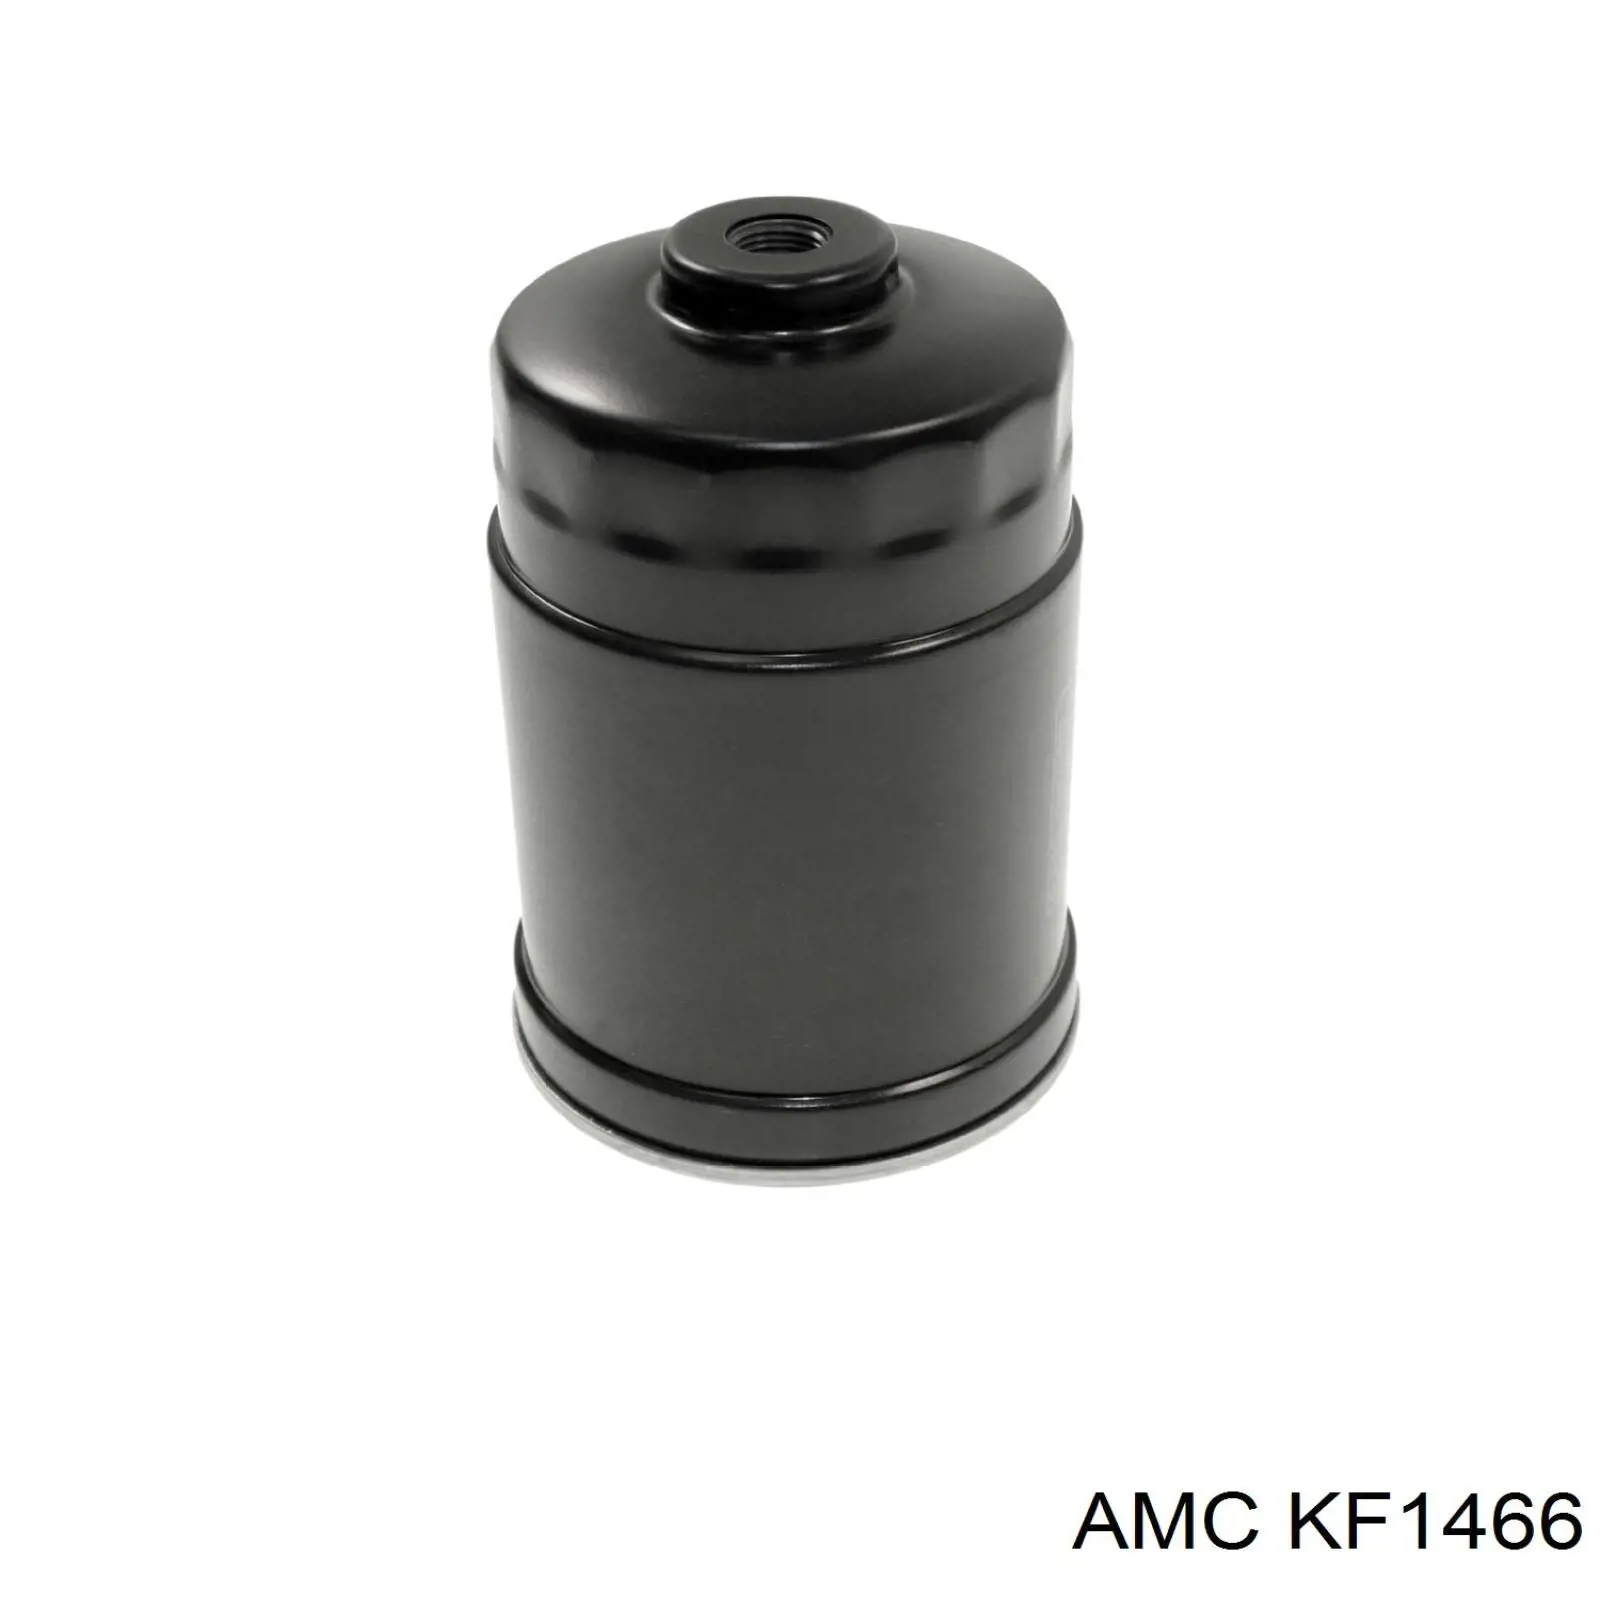 KF-1466 AMC filtro de combustible